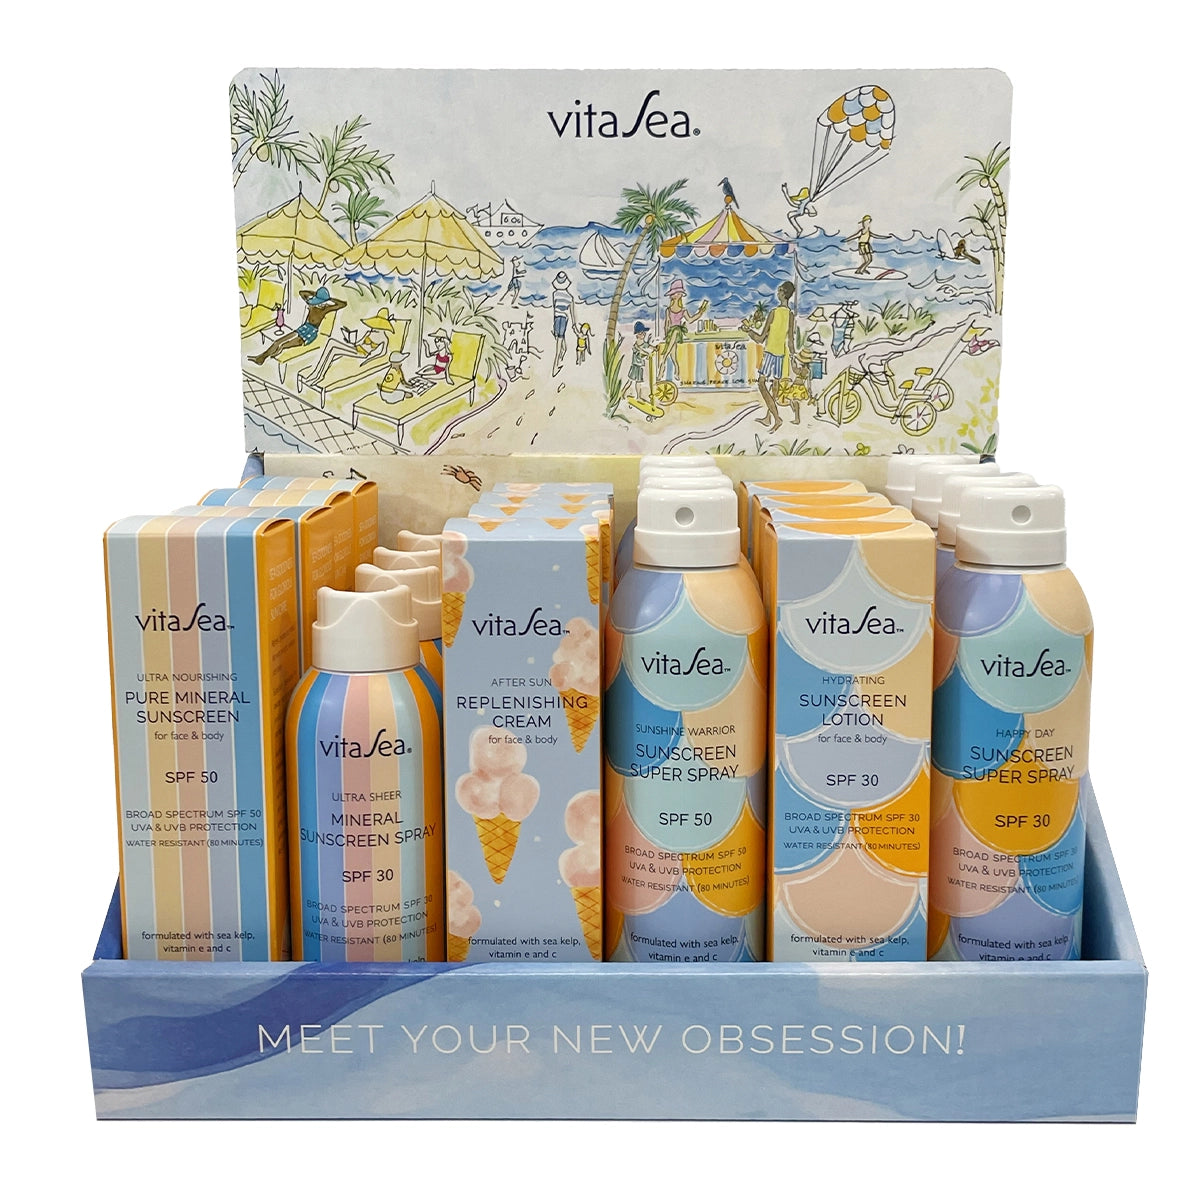 VitaSea Sunscreens